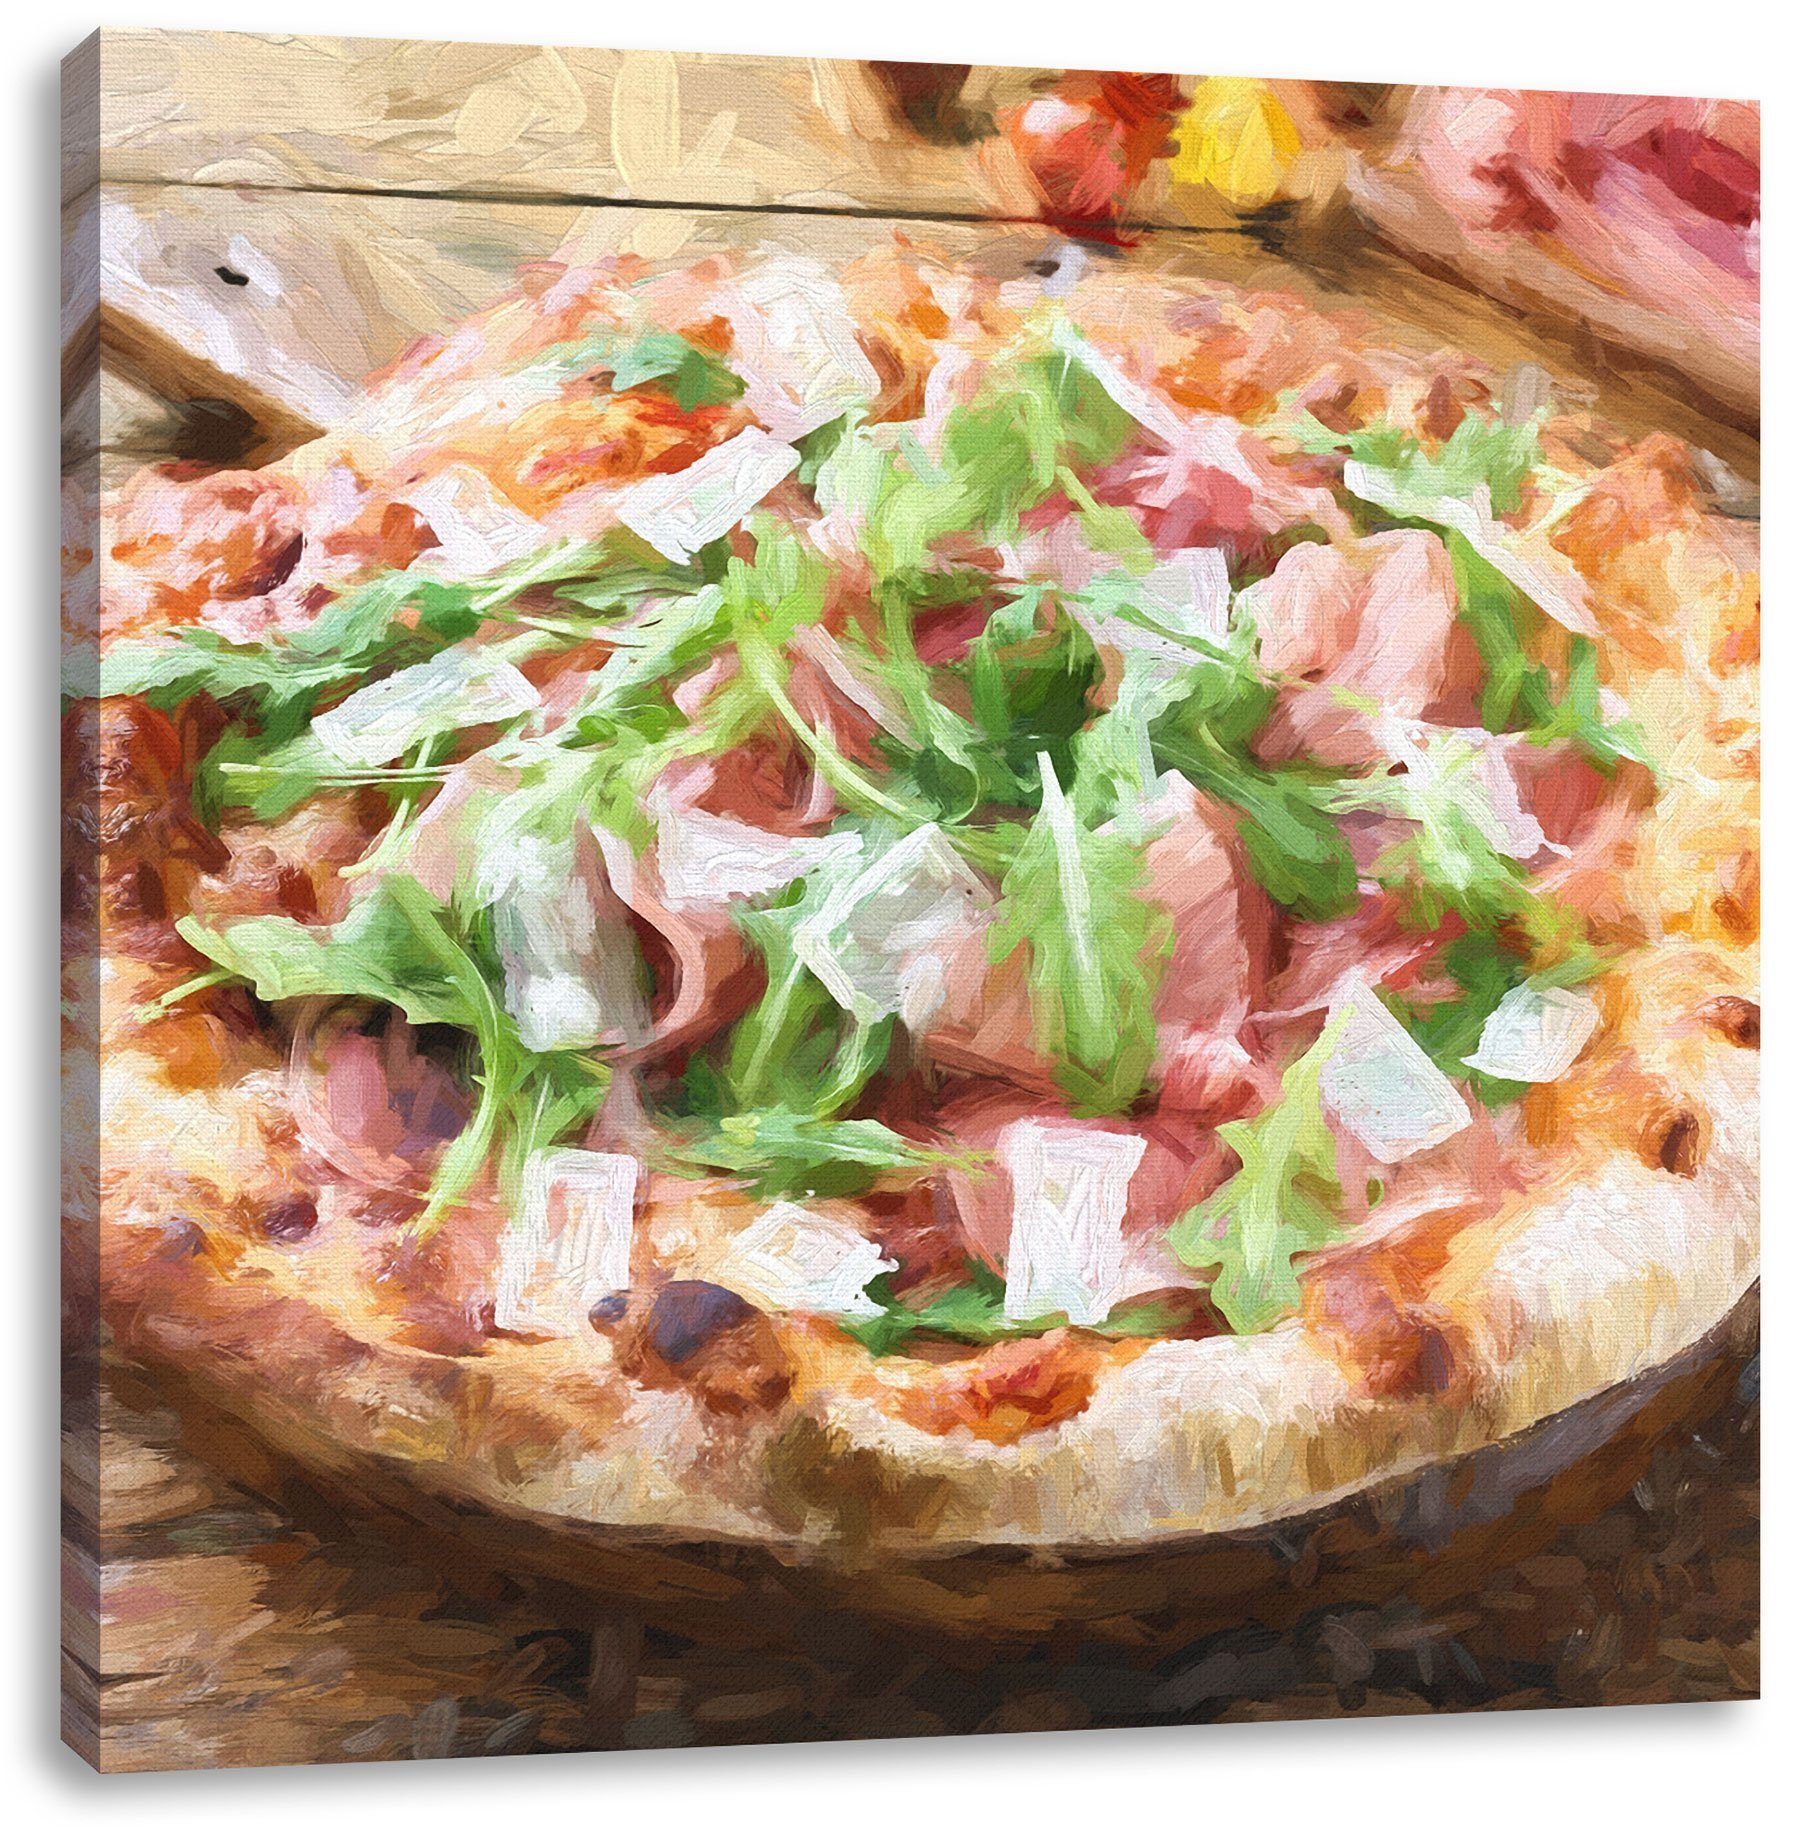 Pixxprint Leinwandbild Prosciutto Pizza auf Holztisch, Prosciutto Pizza auf Holztisch (1 St), Leinwandbild fertig bespannt, inkl. Zackenaufhänger